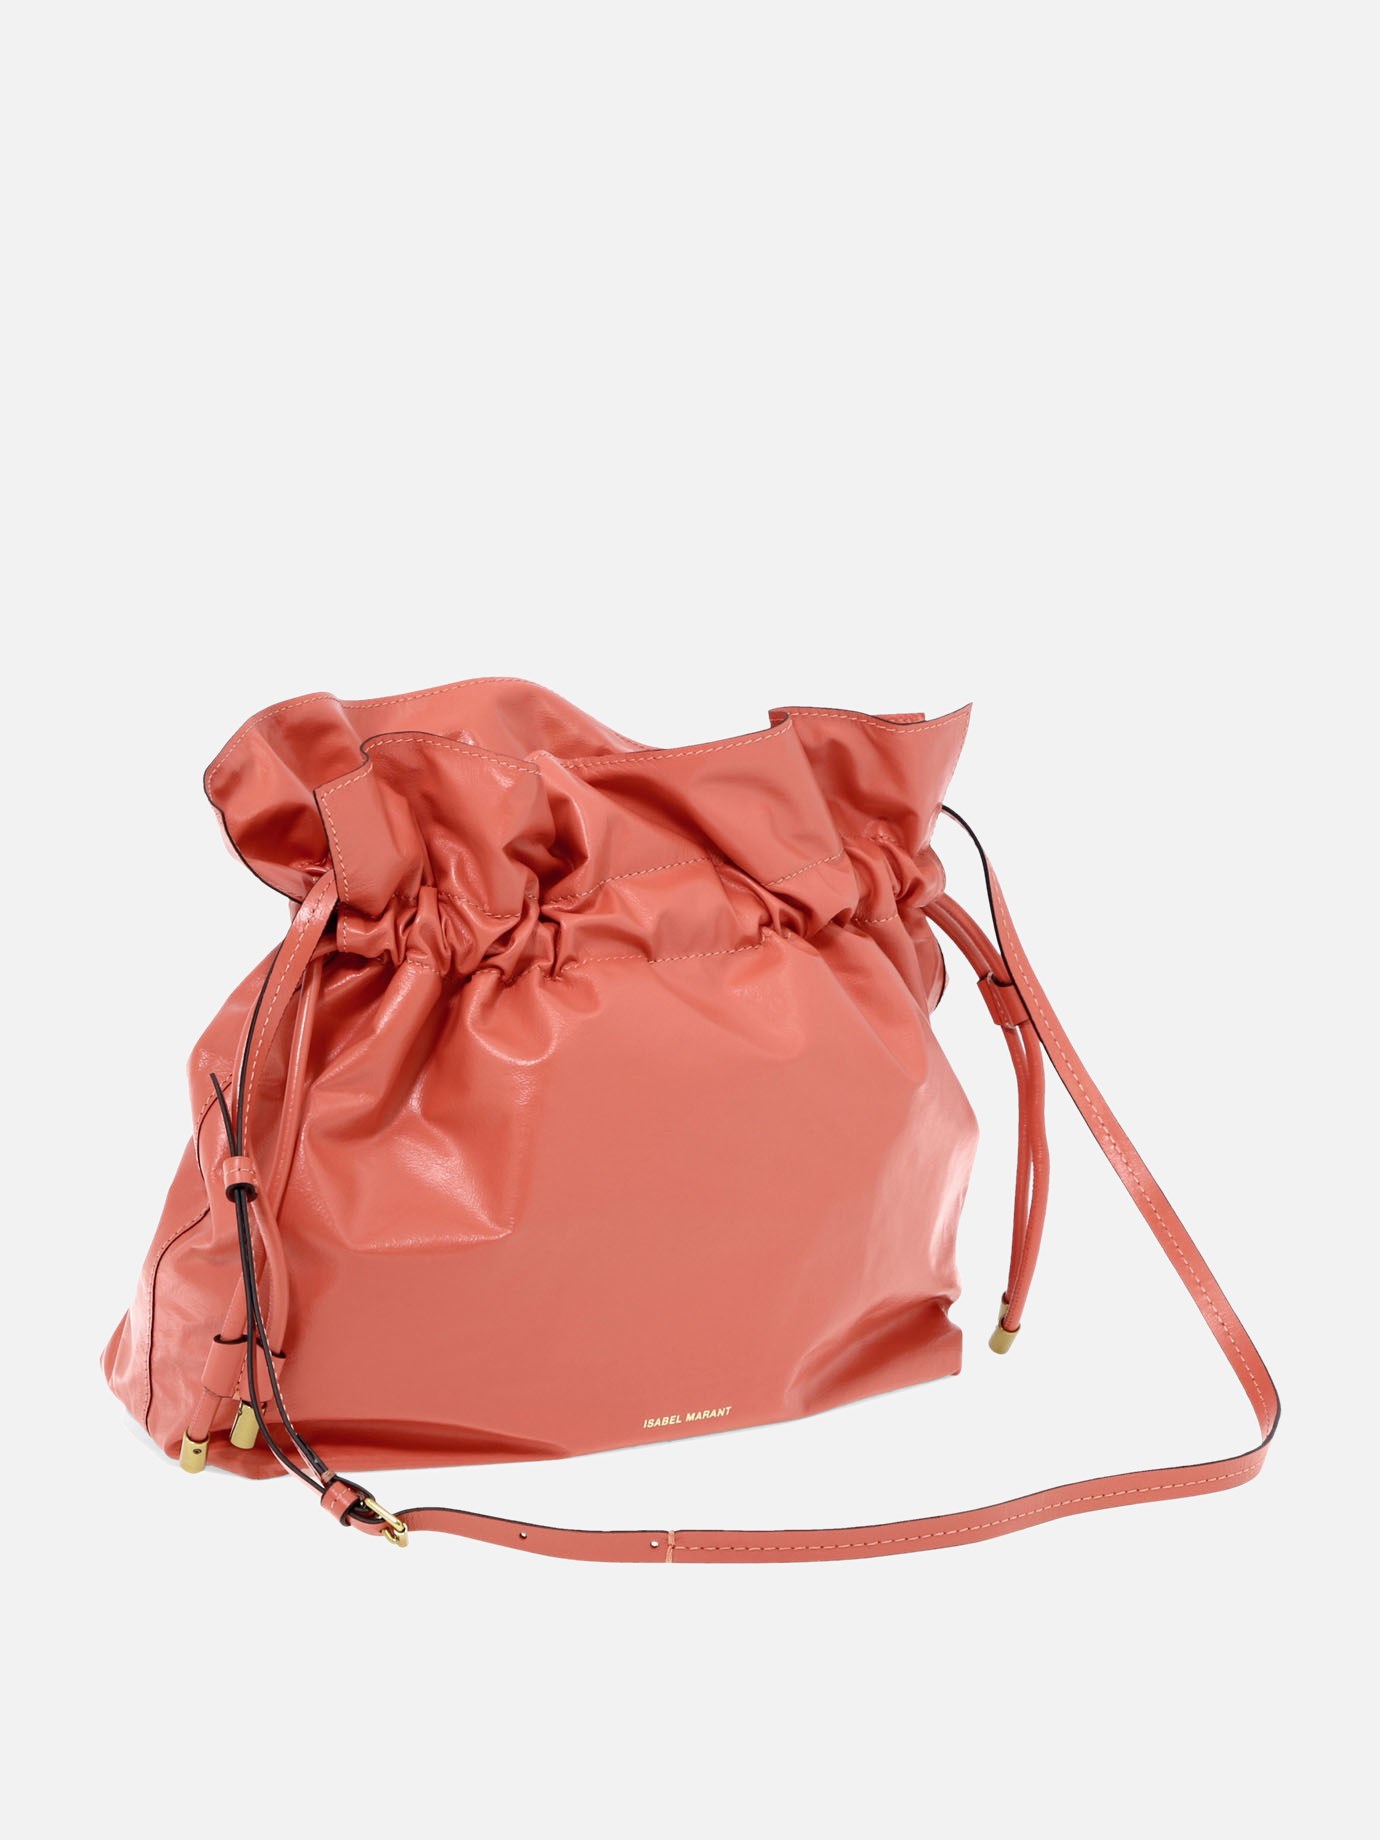  Ailey  crossbody bag by Isabel Marant